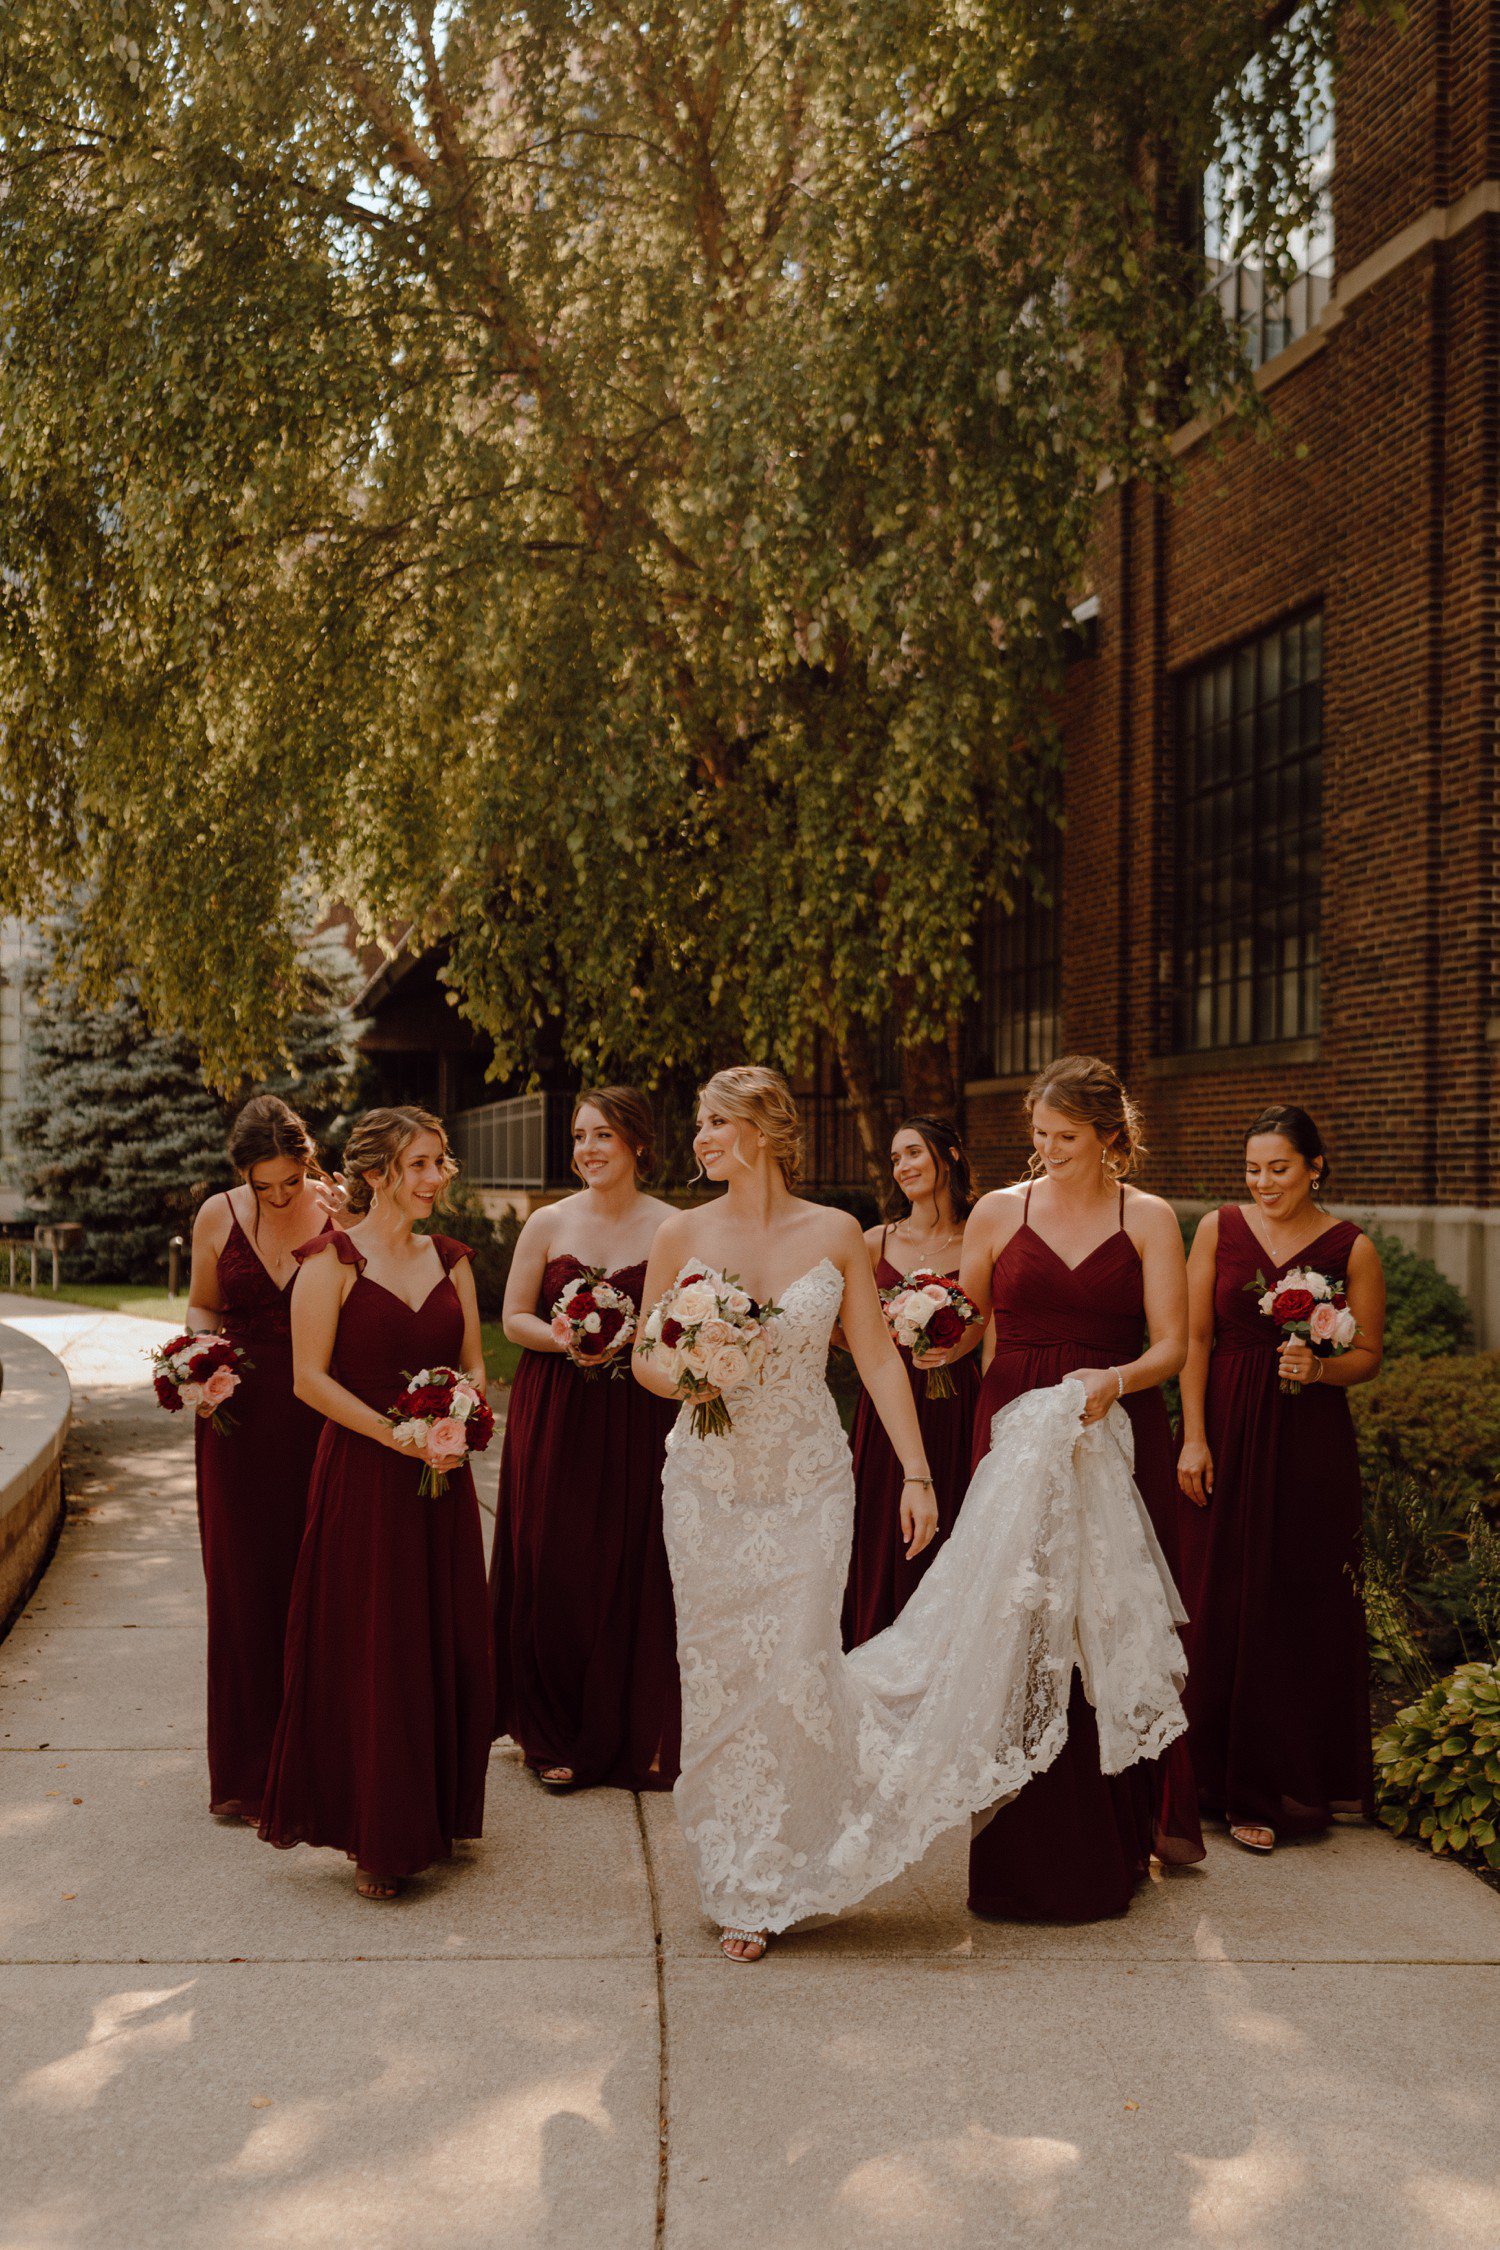 Bridesmaid Photos with maroon bridesmaid dresses